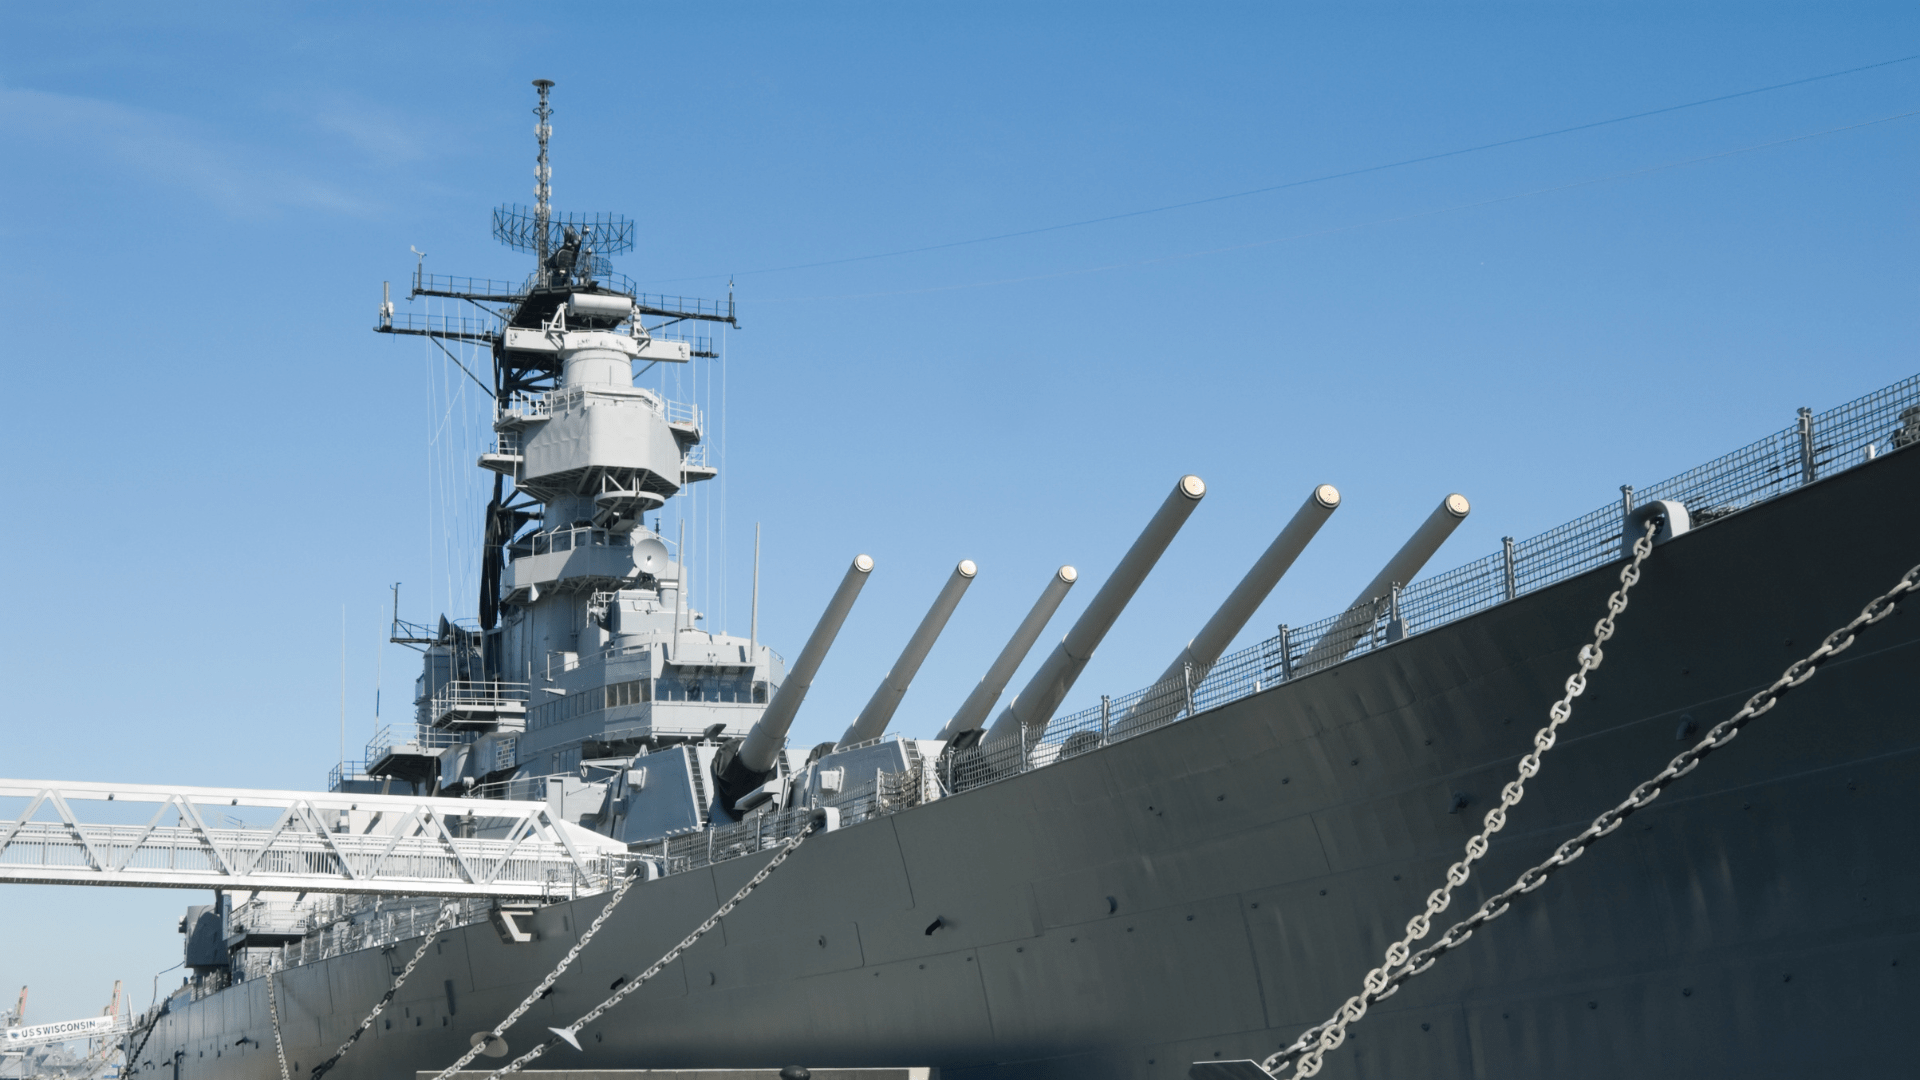 Military Battleship in Dock, US Navy WW2